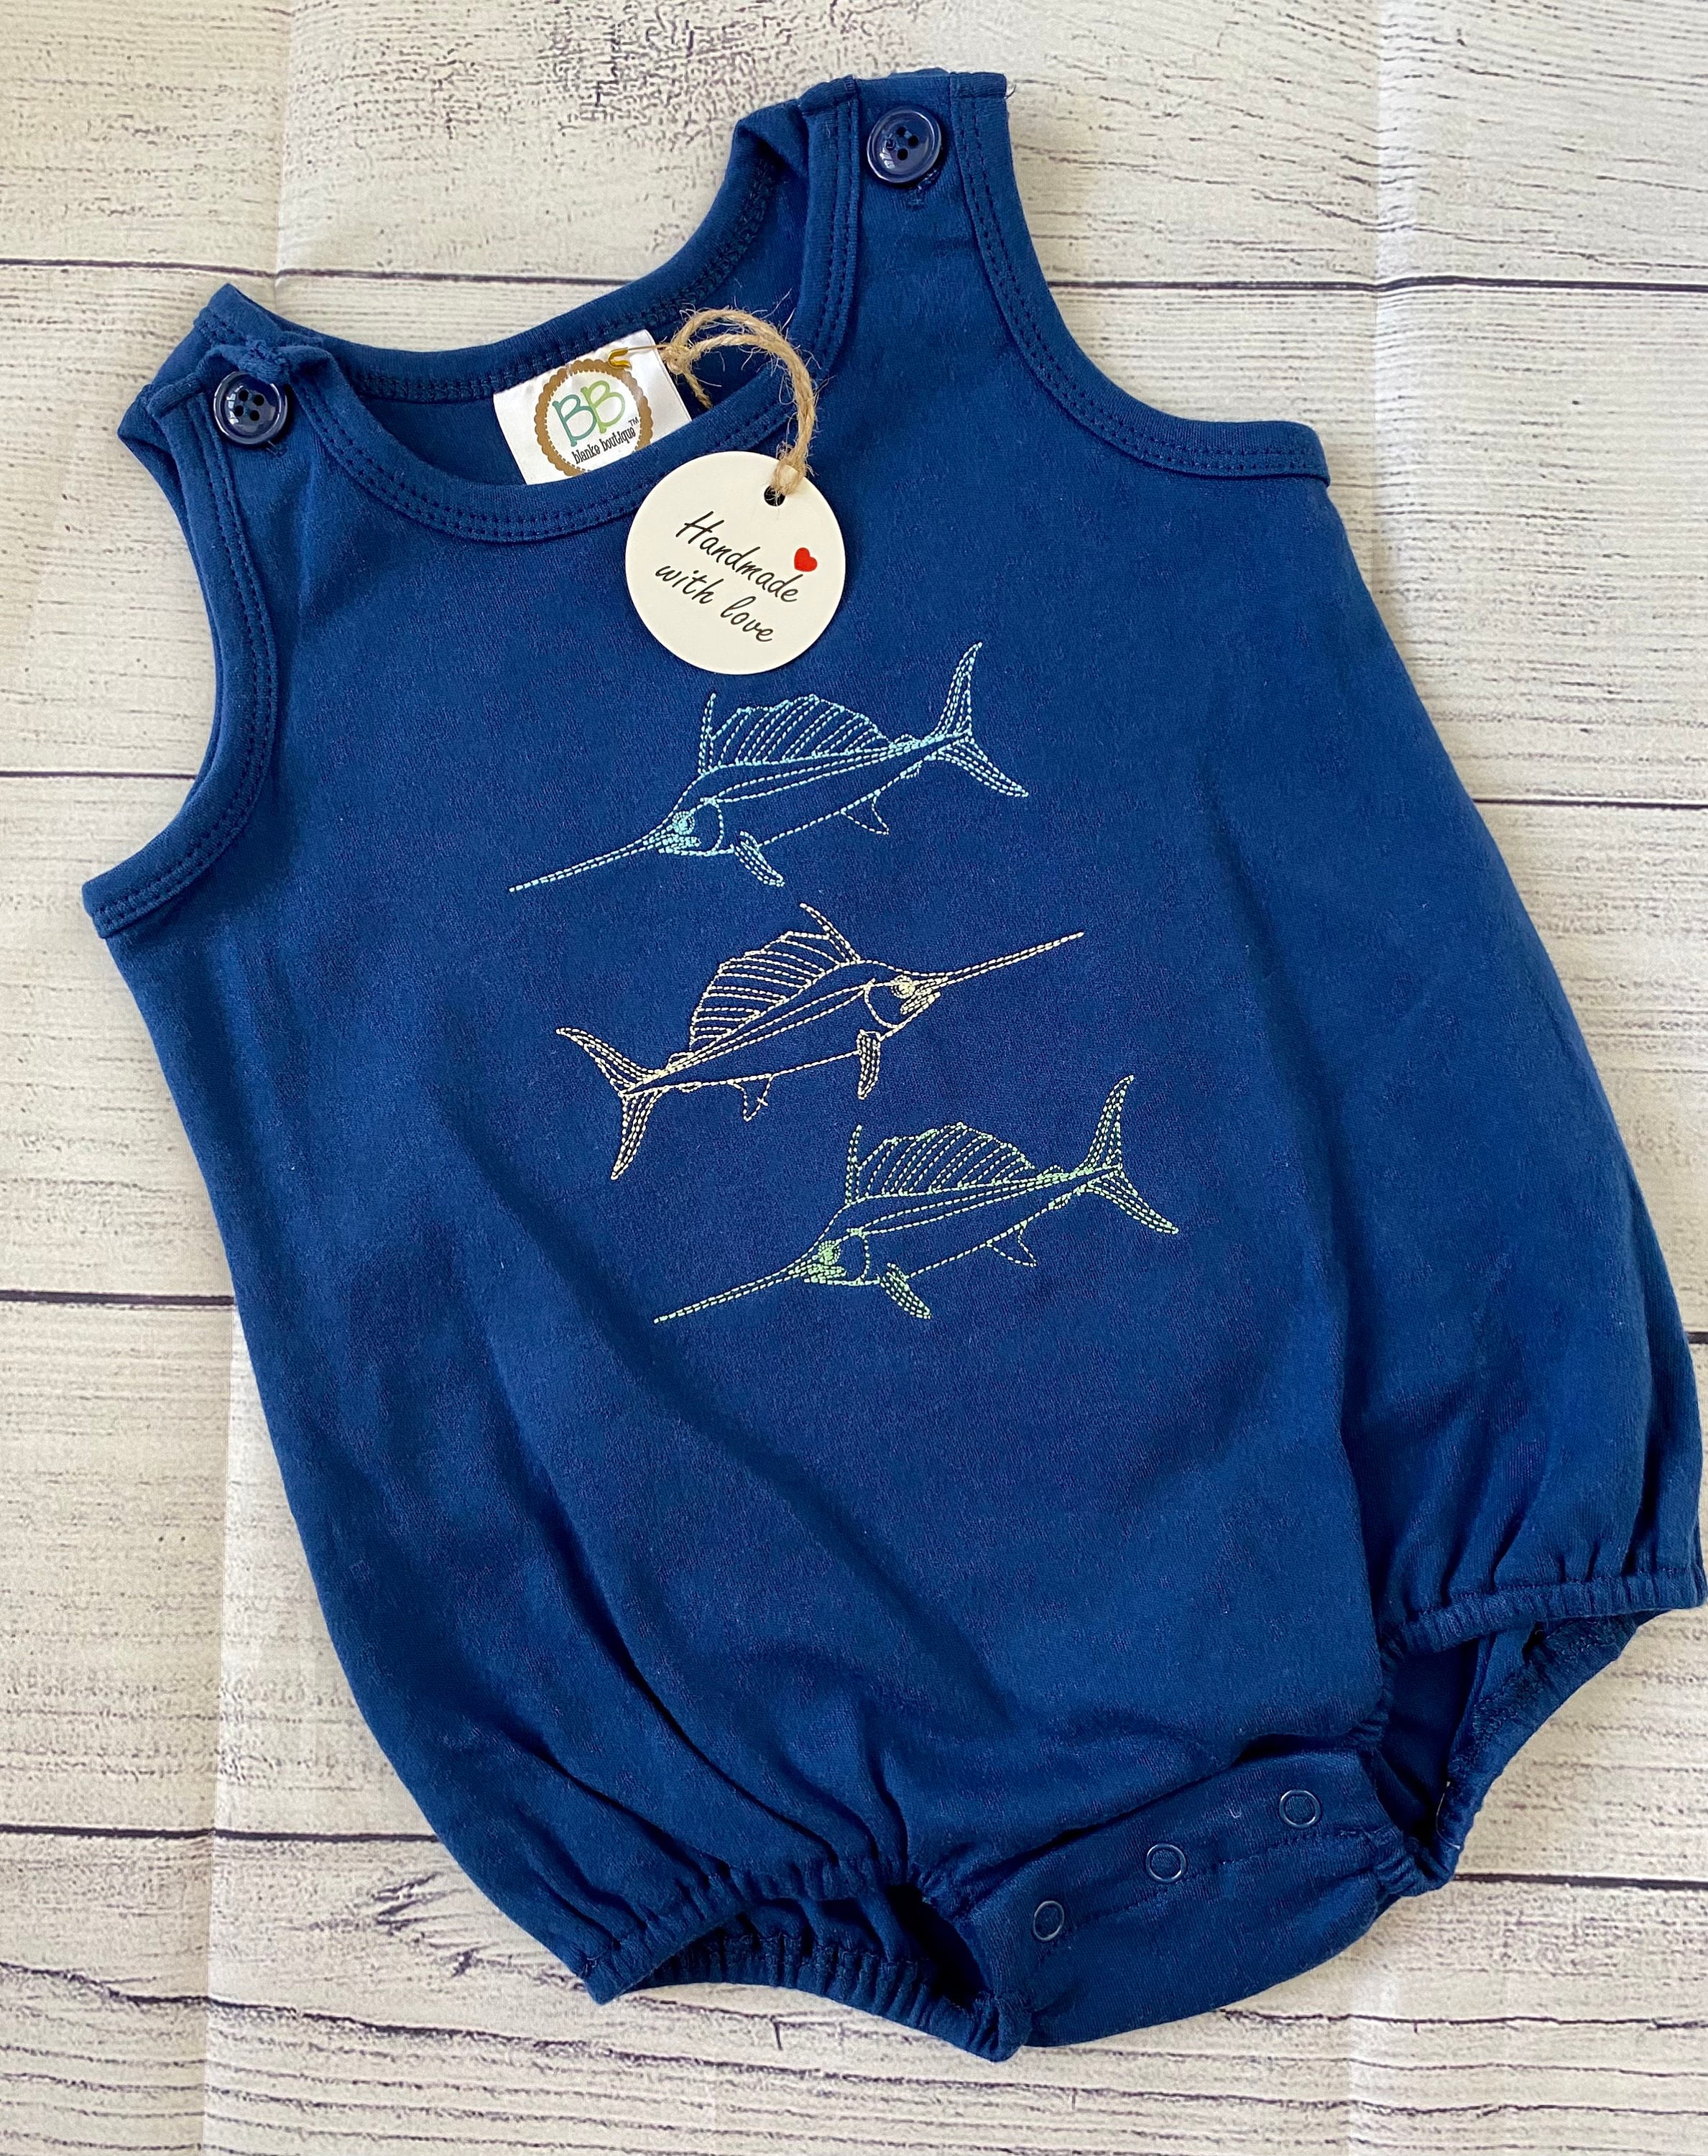 Baby Blue Fishing Romper/Shirt – Sew Sudberry